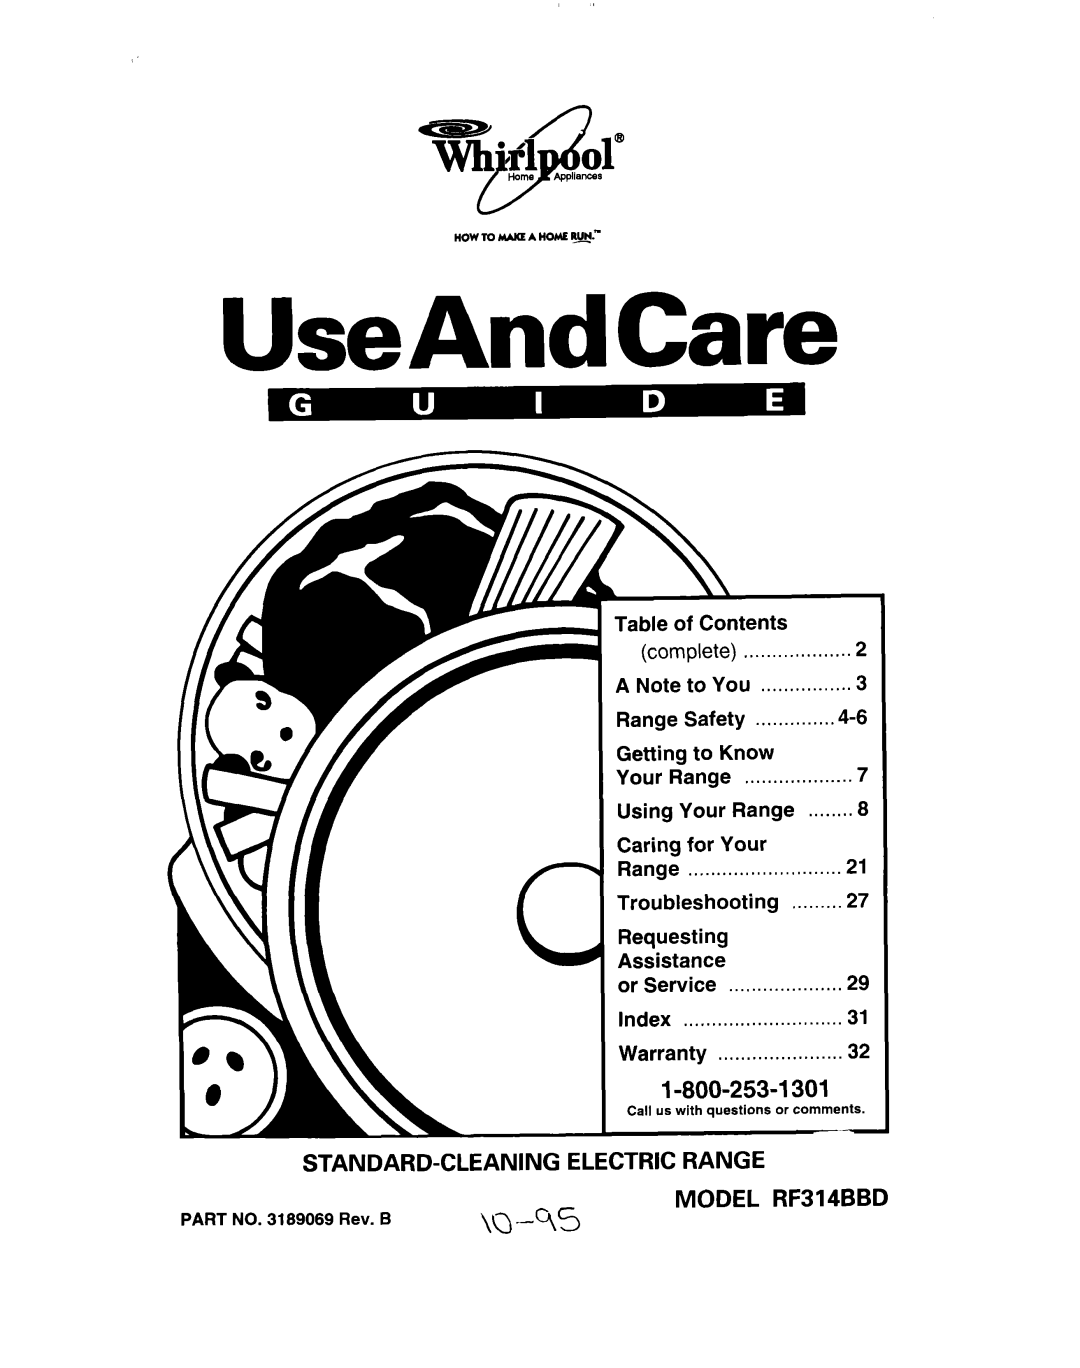 Whirlpool manual UseAndCare, STANDARD-CLEANINGELECTRIC RANGE MODEL RF314BBD 